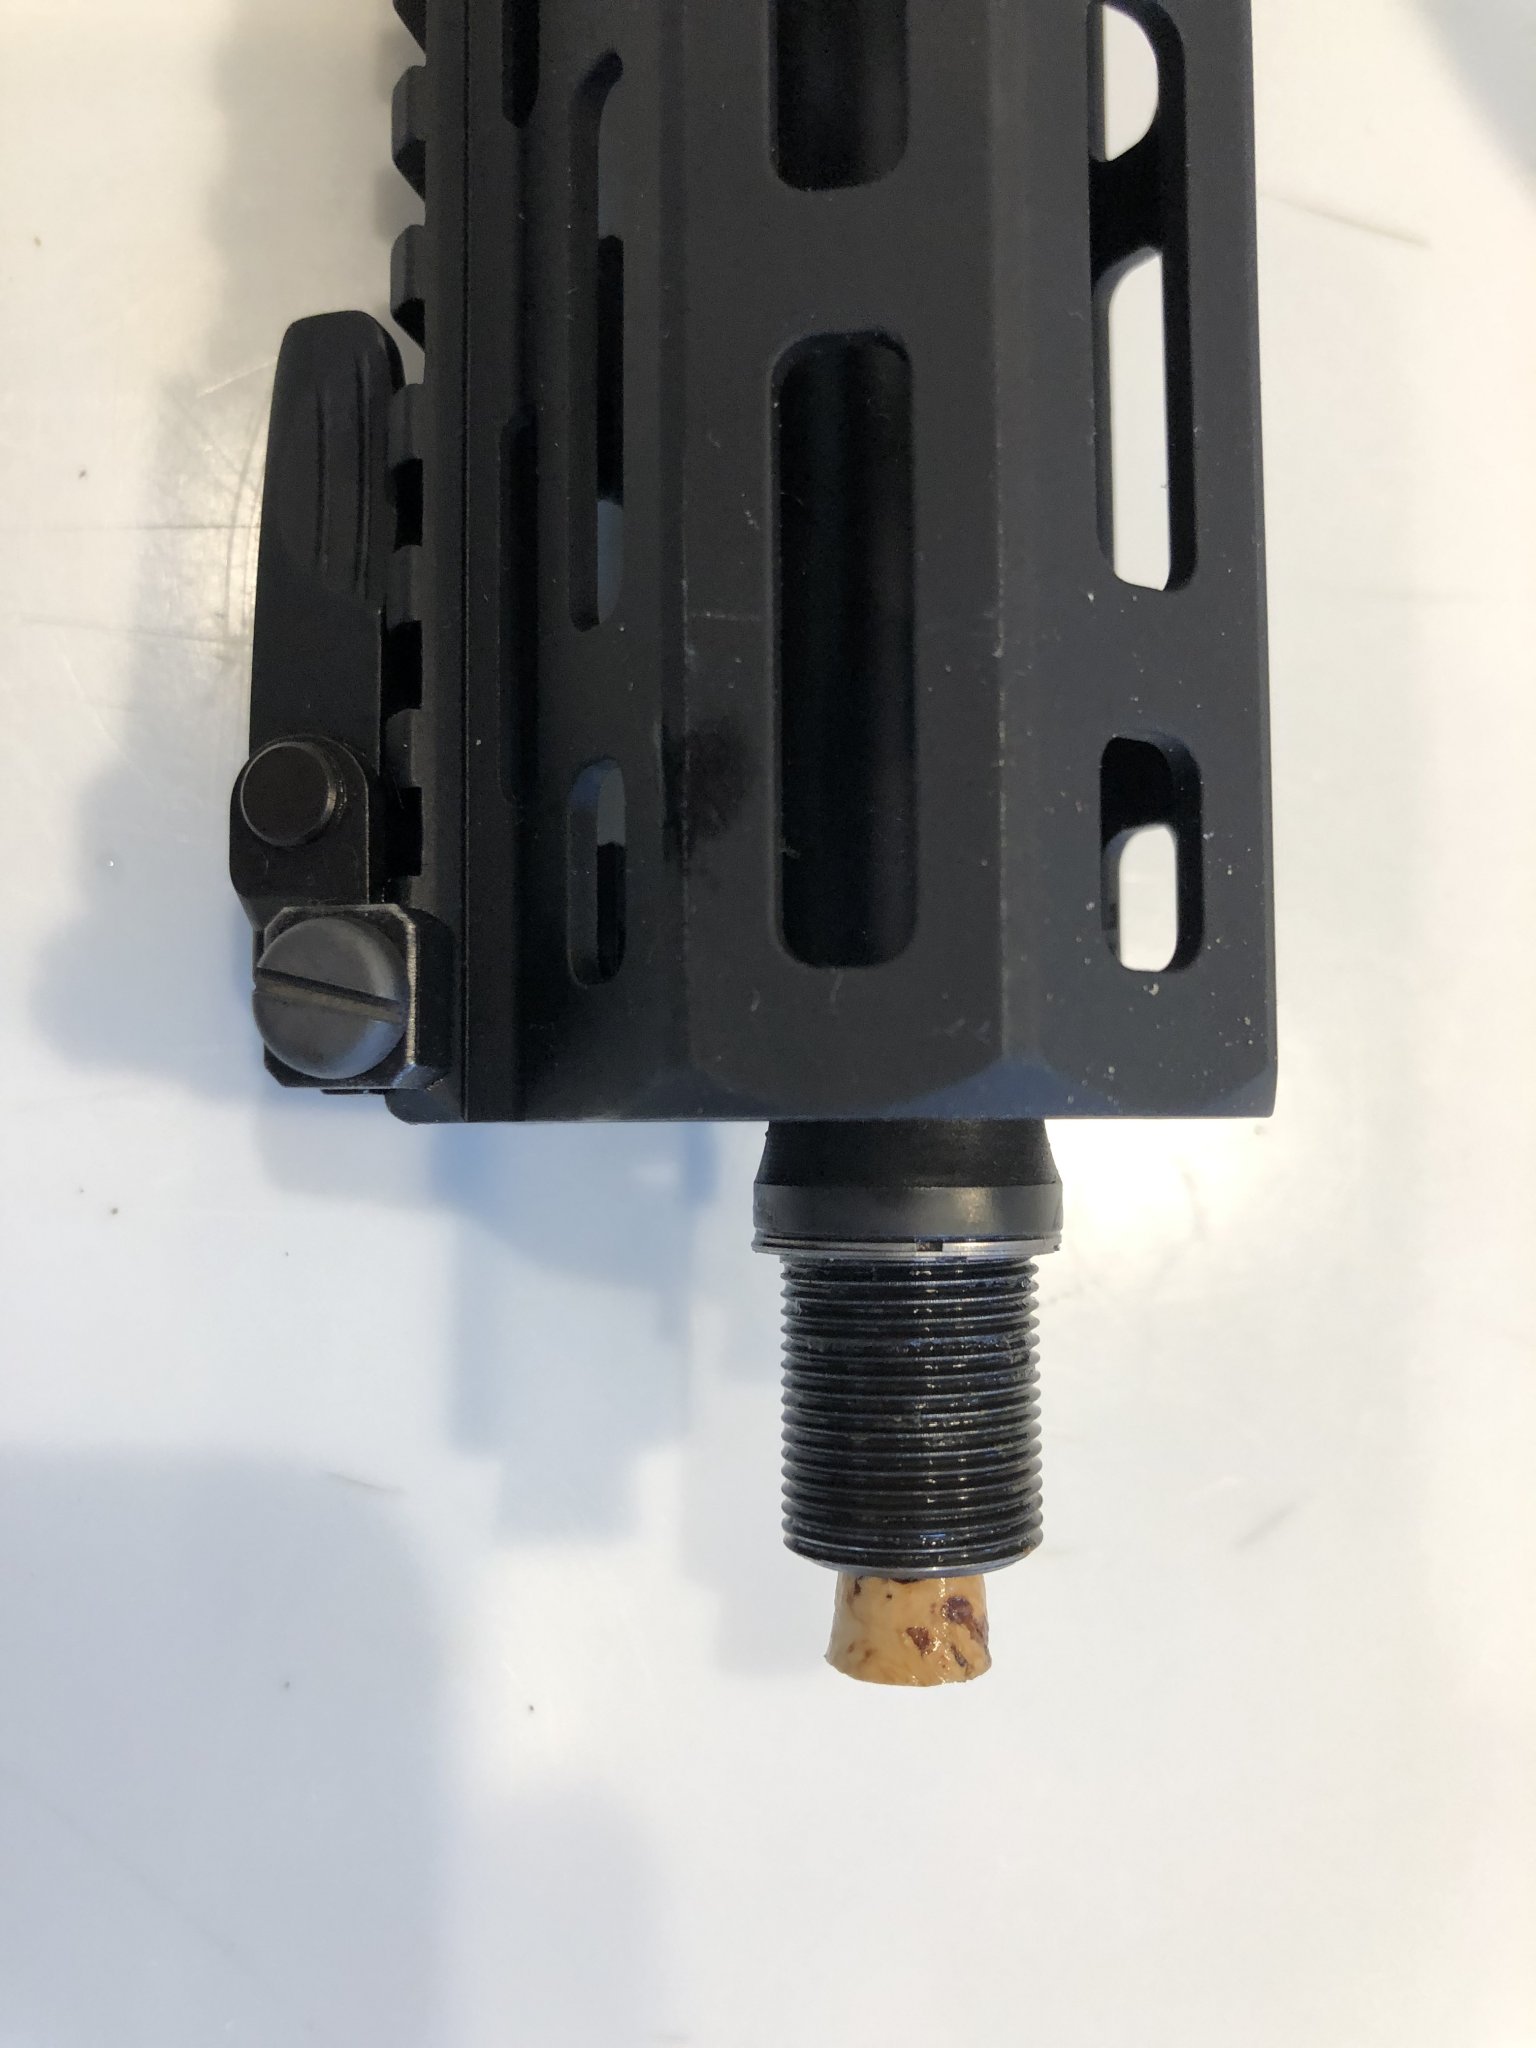 KAC 300 Blackout Removing Rocksett Muzzle Threads Hot WaterIMG_3794 copy.JPG